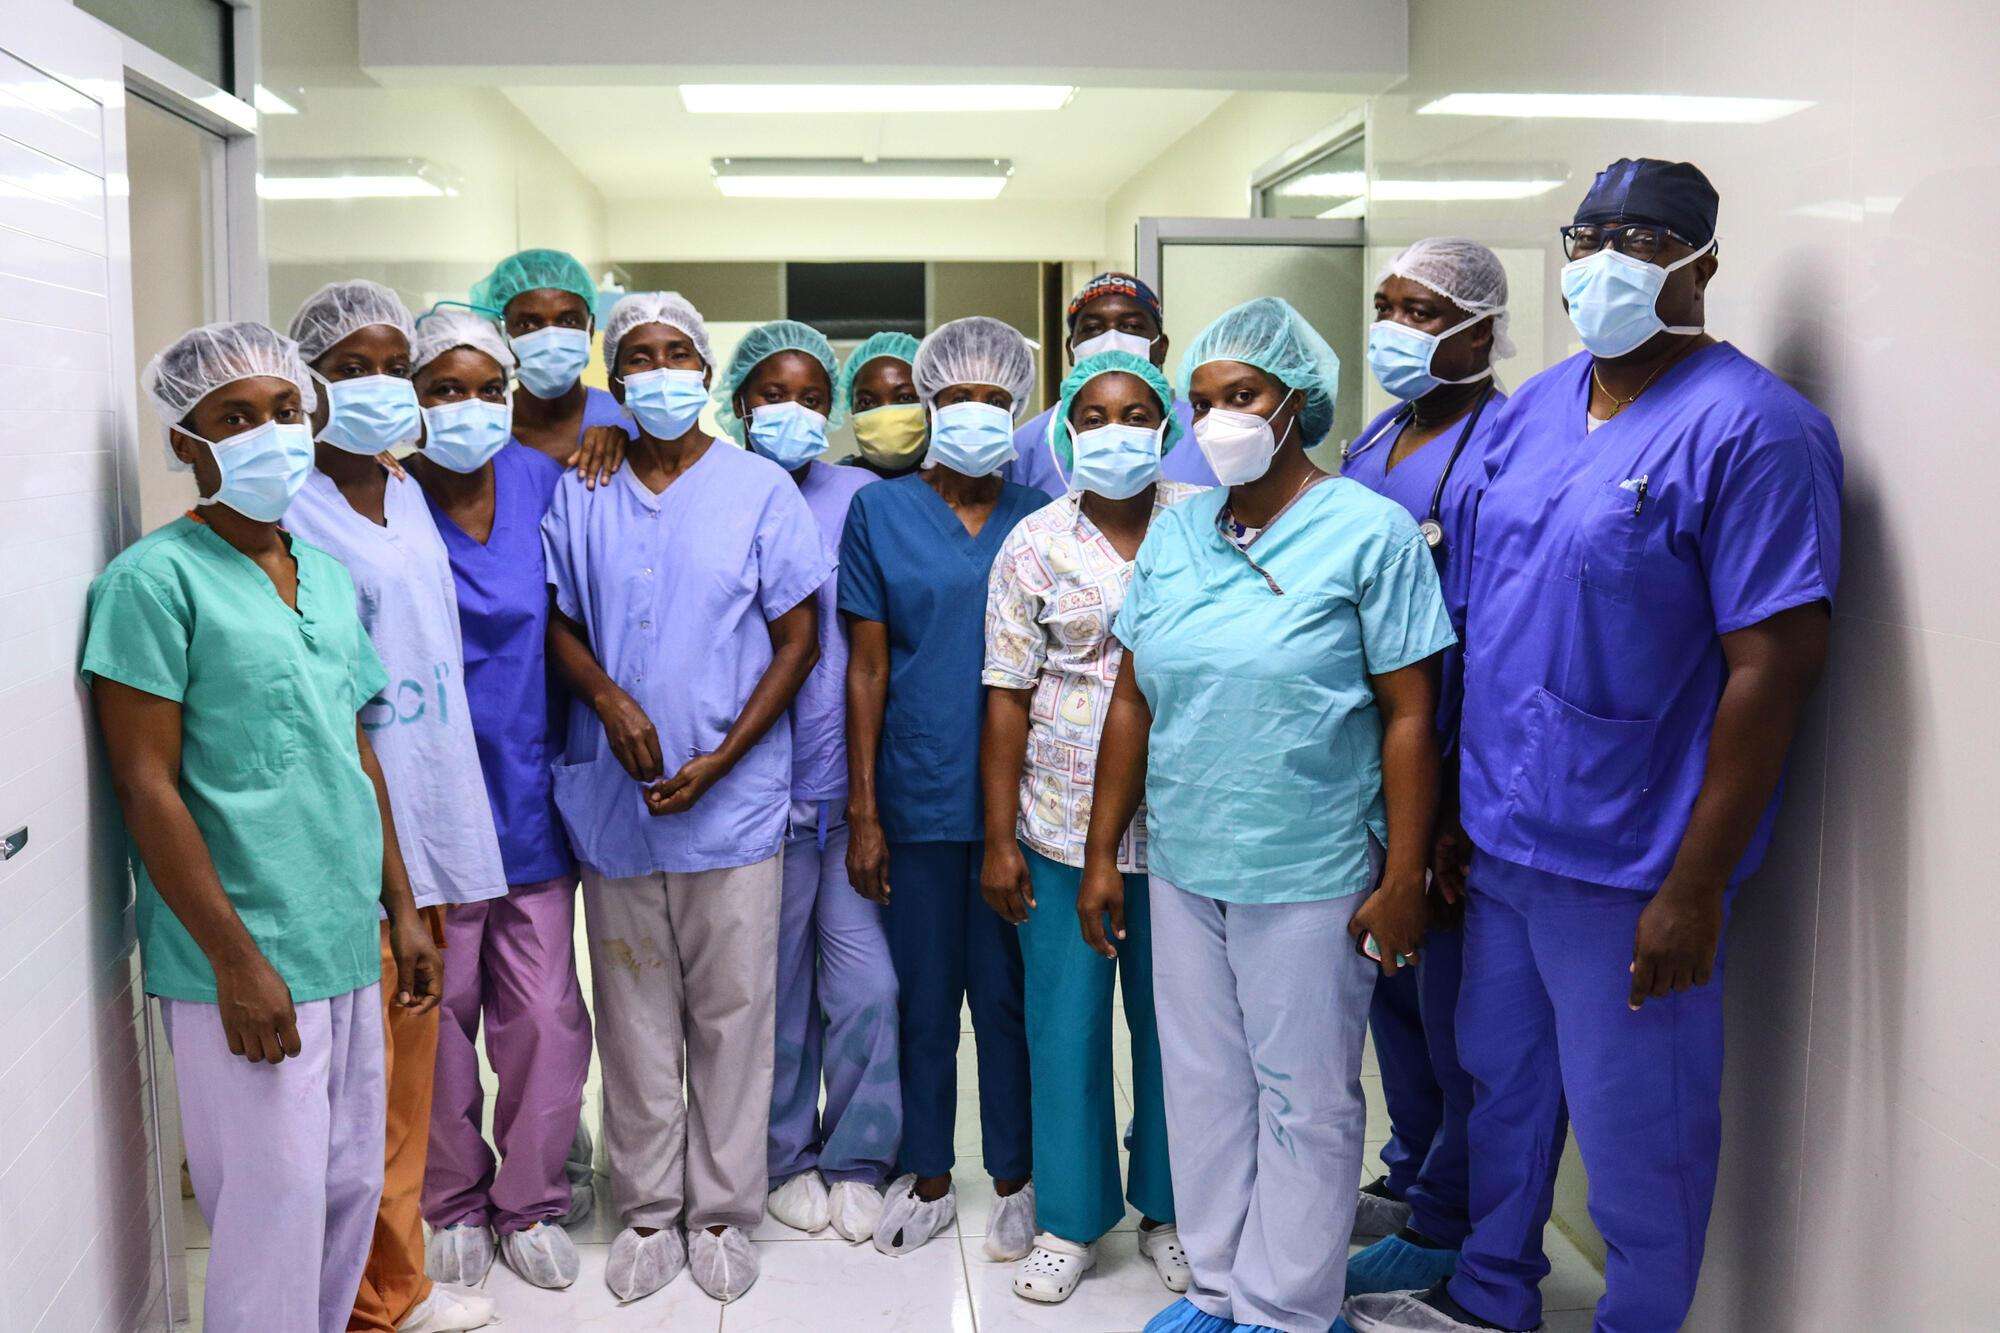 Haiti earthquake - St Antonine hospital staff in Jérémie